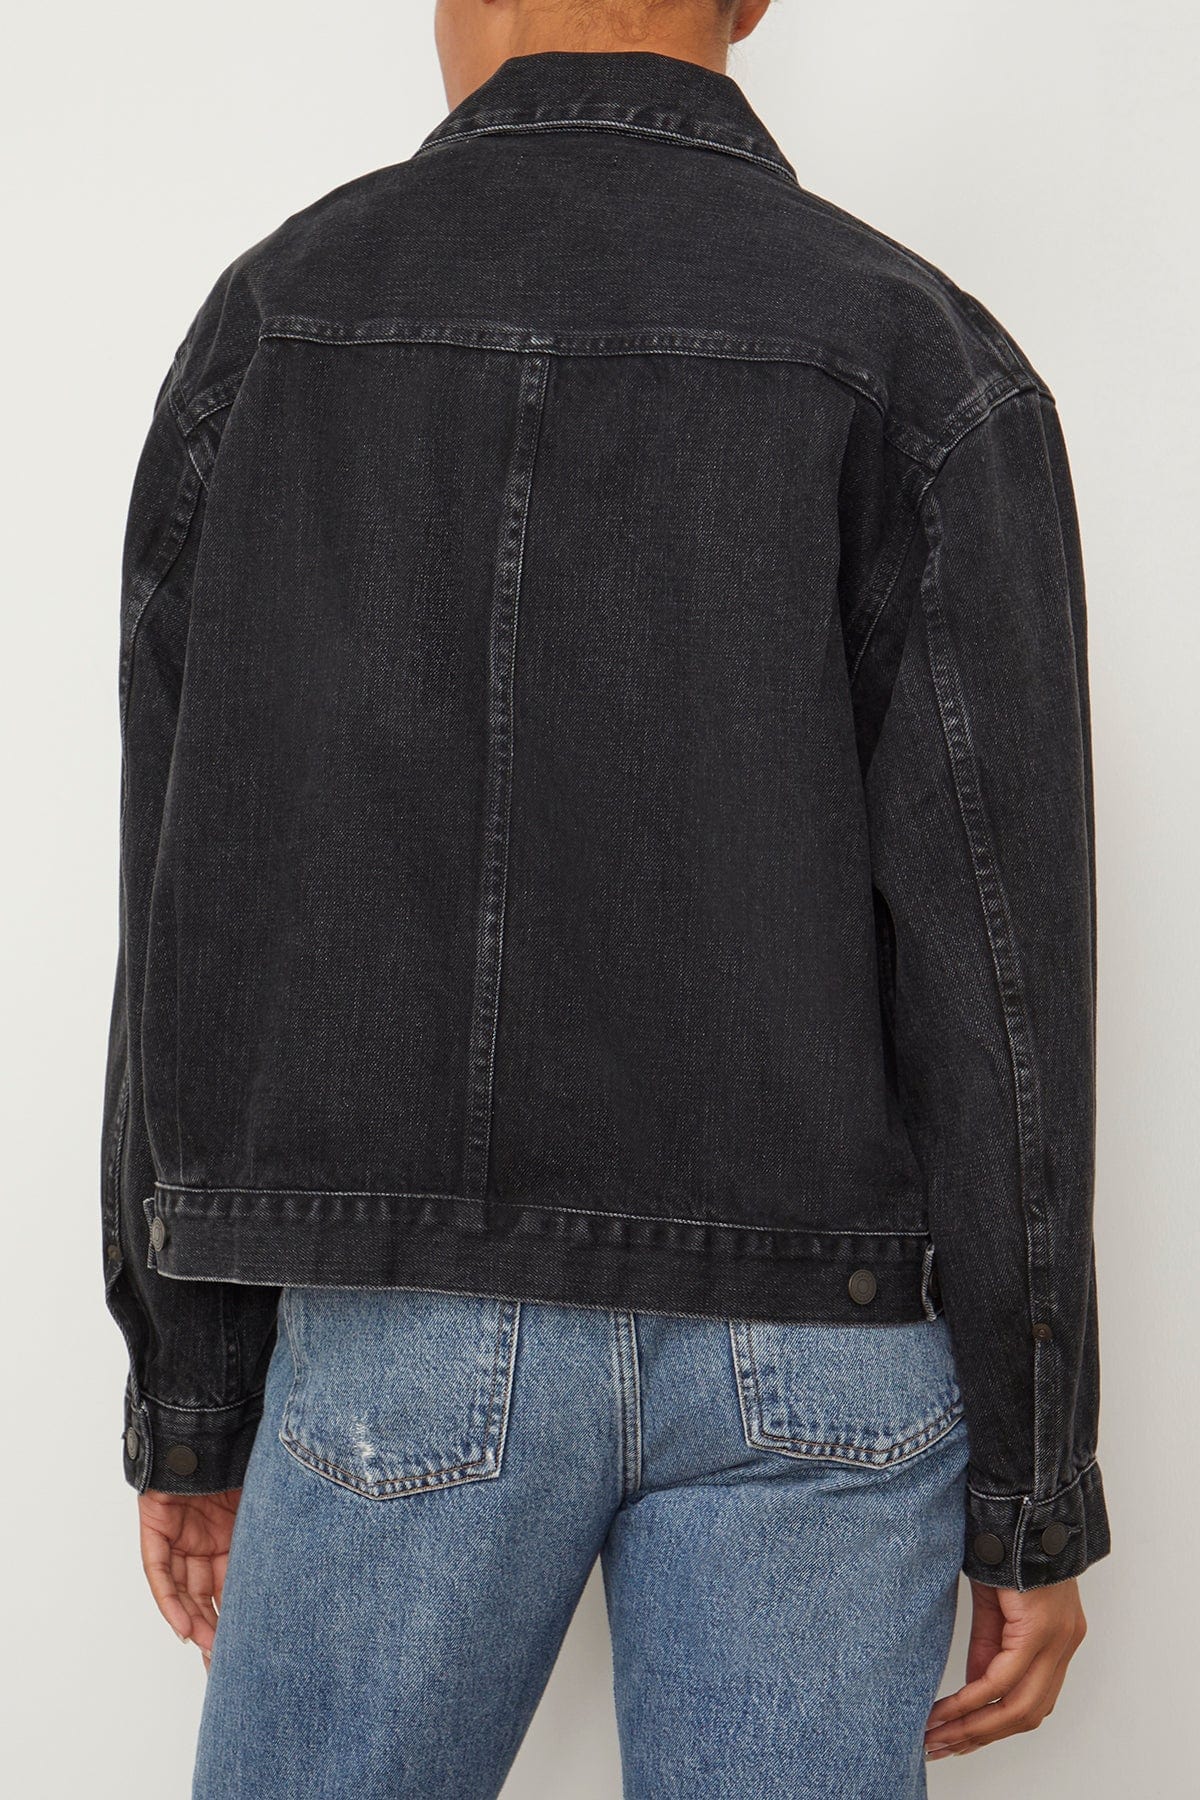 Tanaka New Classic Jean Jacket in Black Selvedge – Hampden Clothing